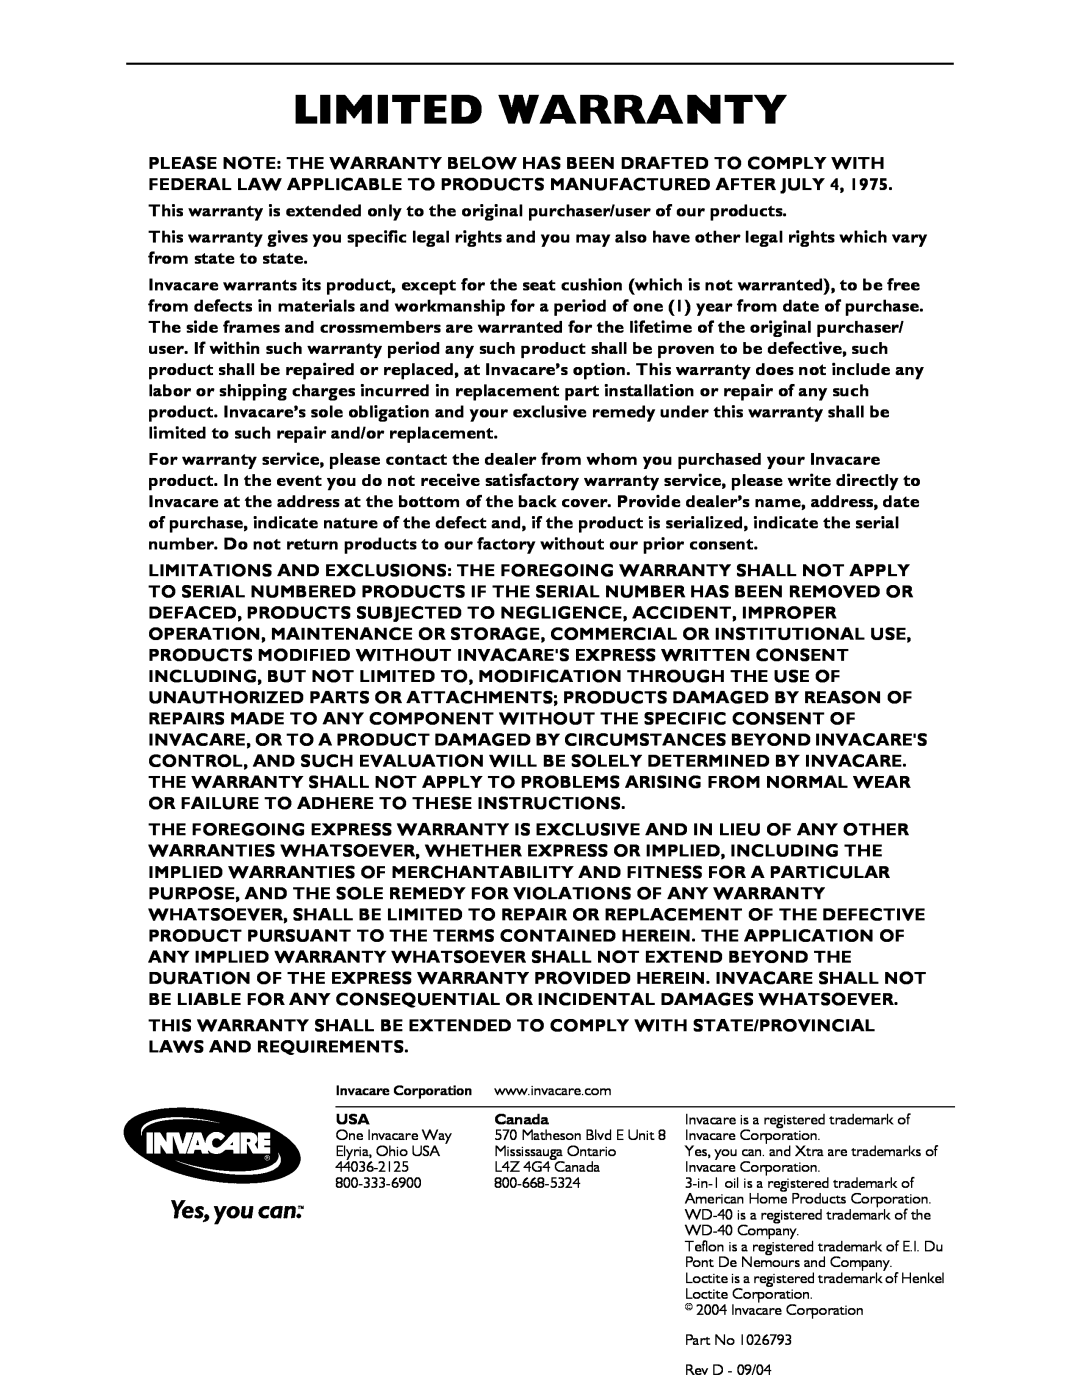 Invacare 1026793 manual Limited Warranty, Canada 